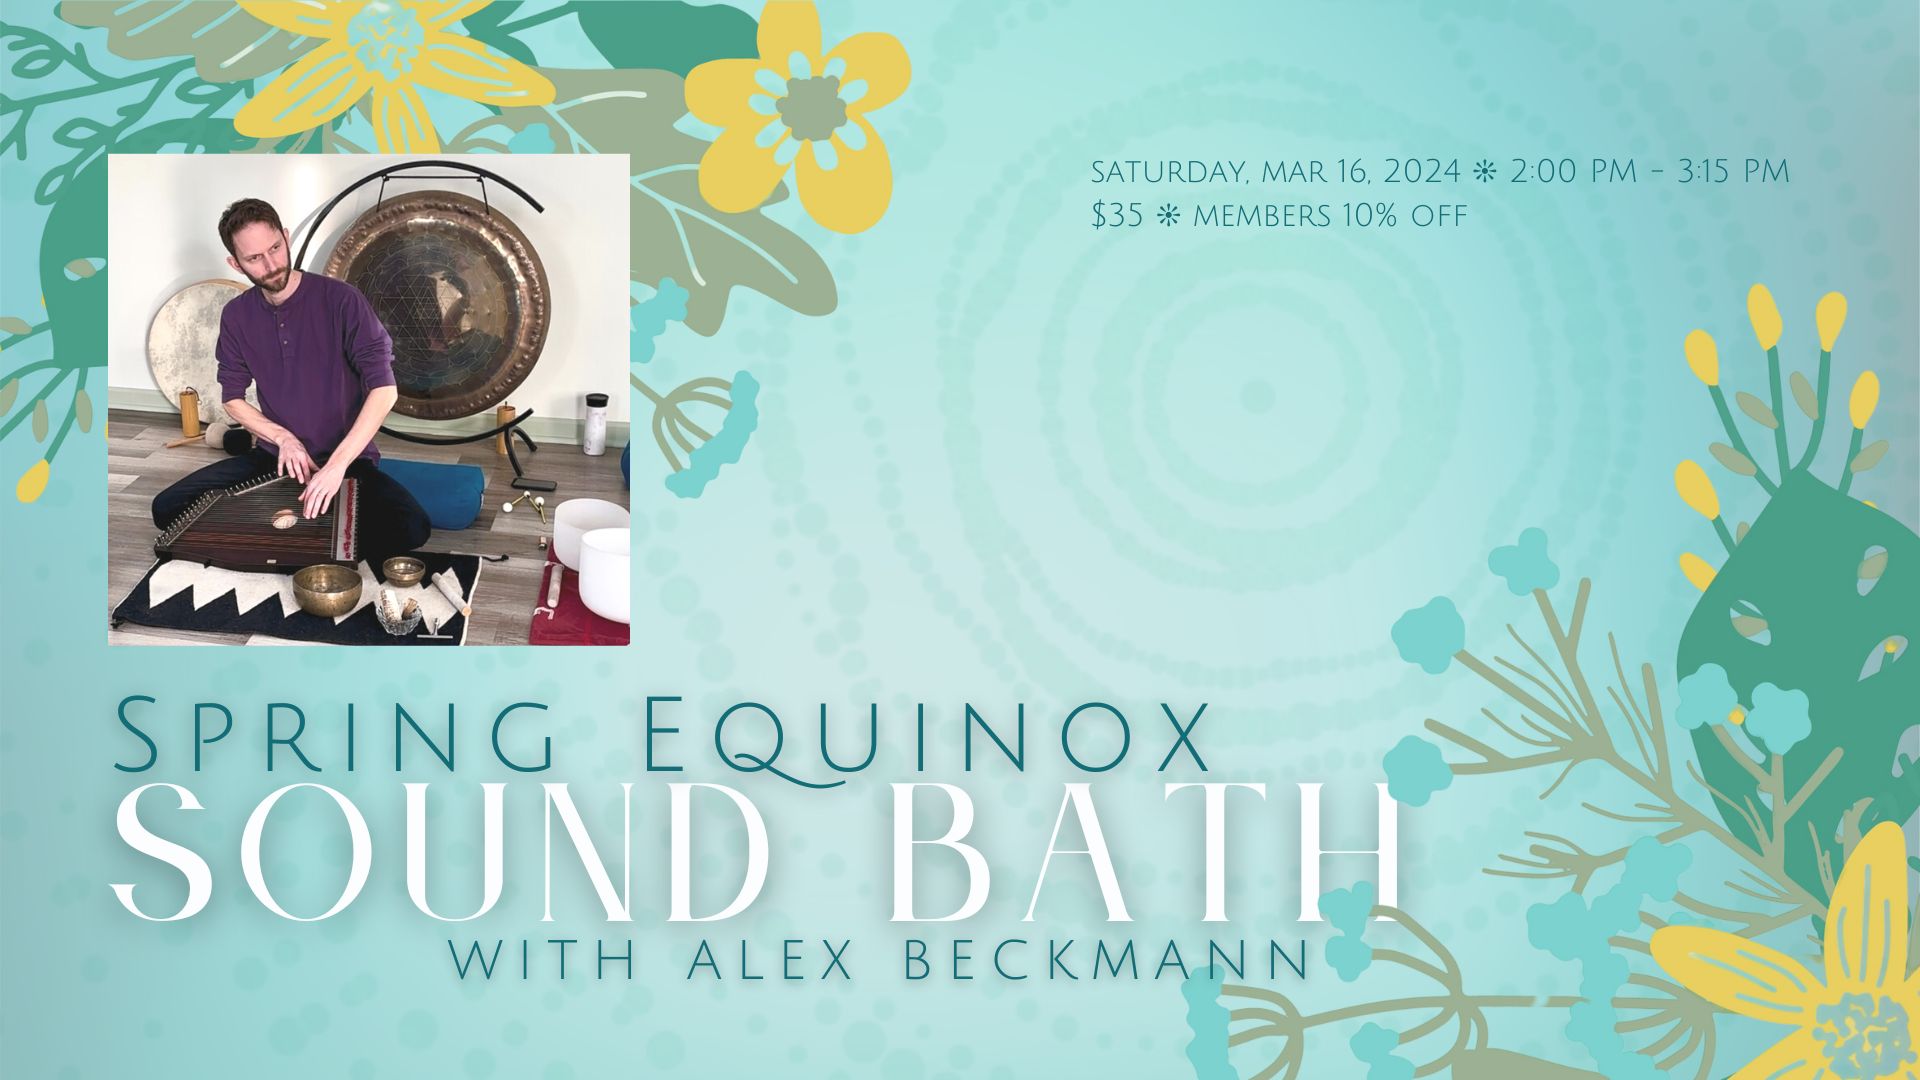 Flyer for Spring Equinox Sound Bath